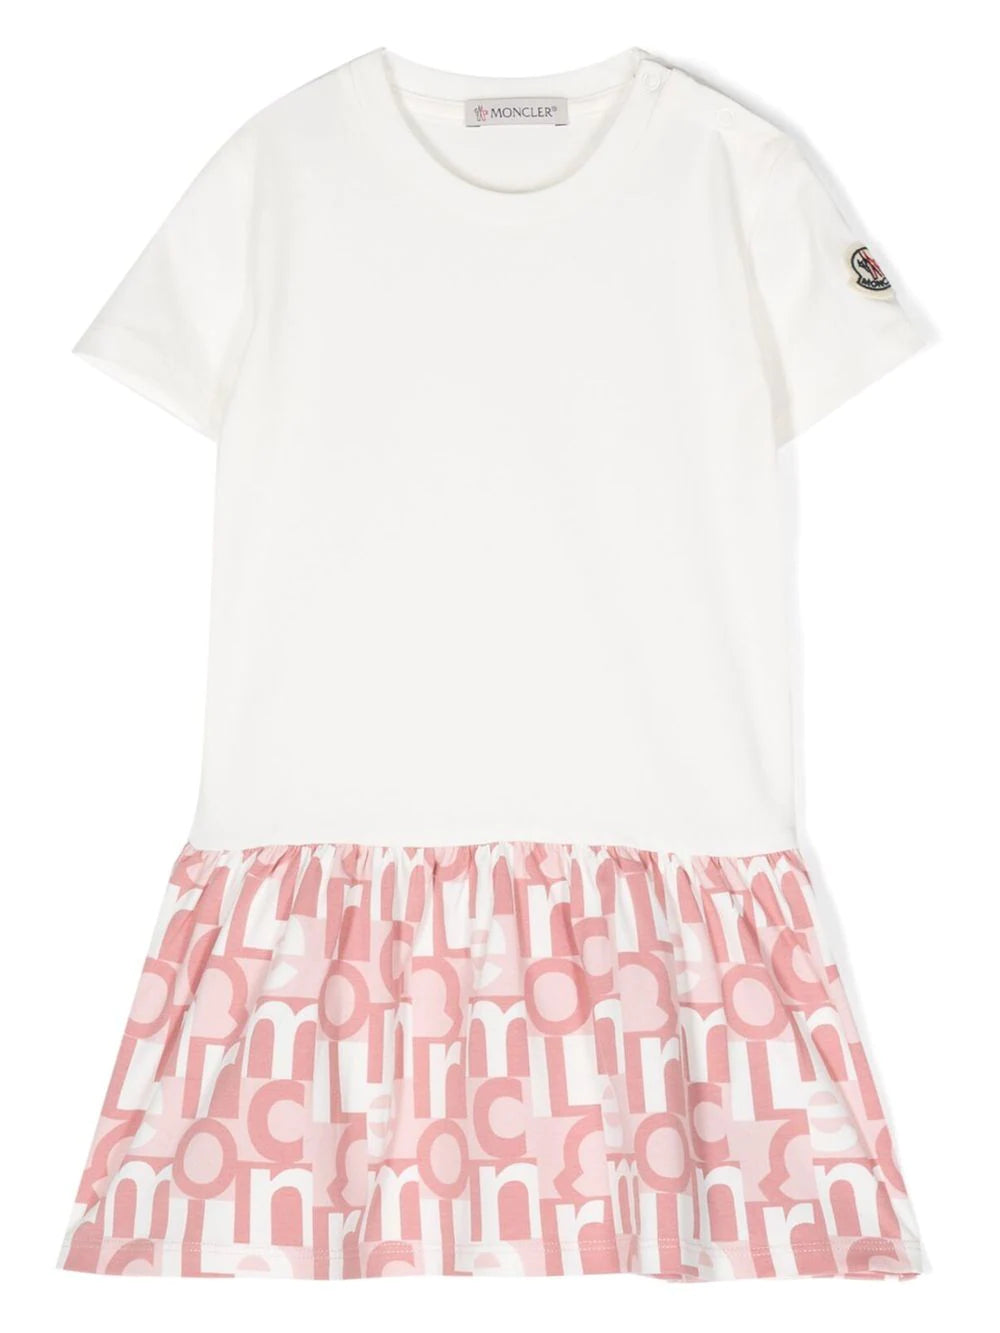 MONCLER BABY Monogram Print Dress White/Pink - MAISONDEFASHION.COM